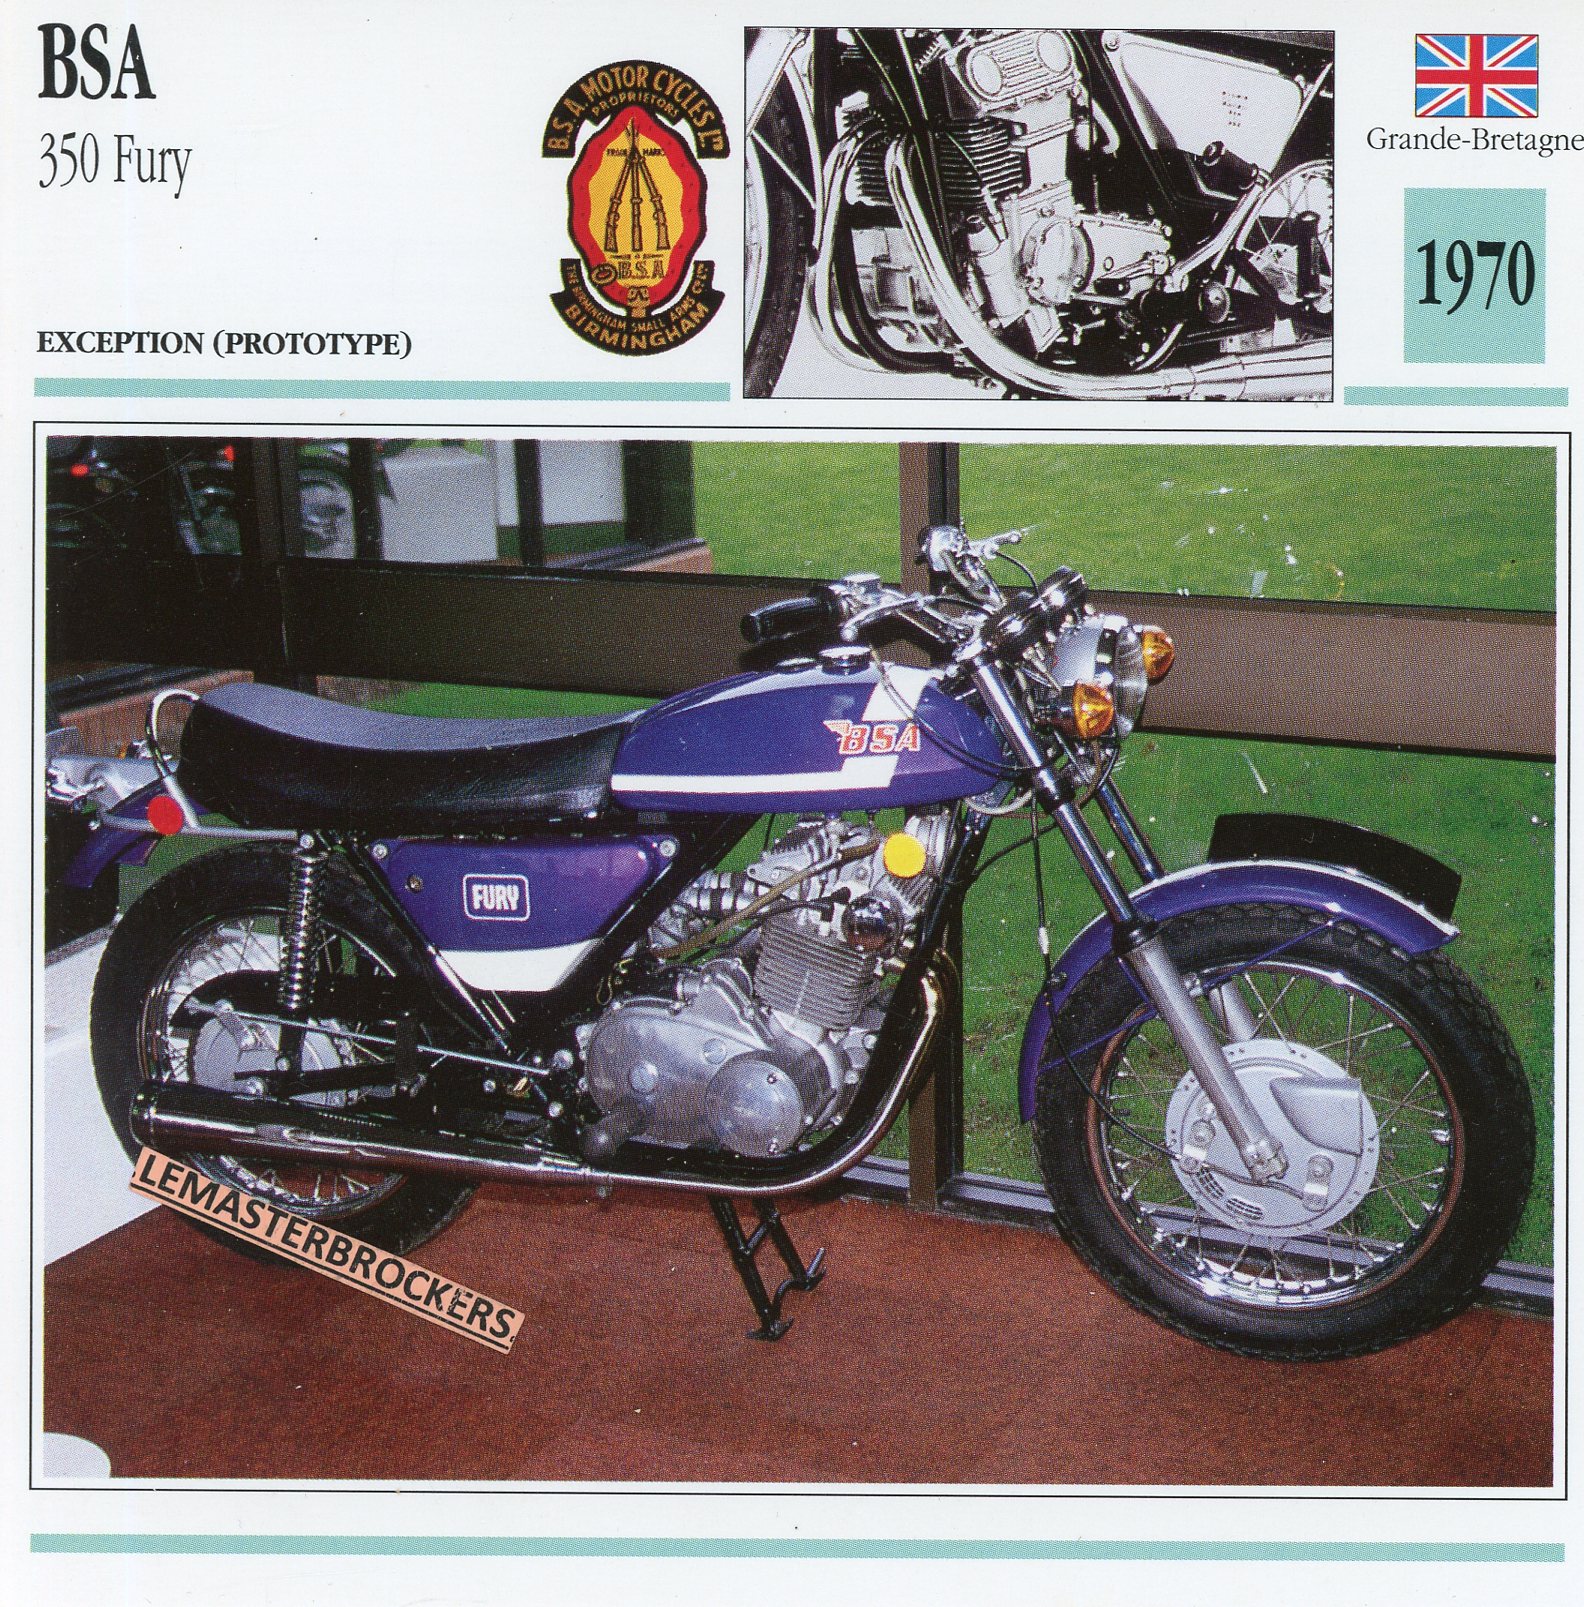 BSA-350-FURY-1970-FICHE-MOTO-CARDS-ATLAS-LEMASTERBROCKERS